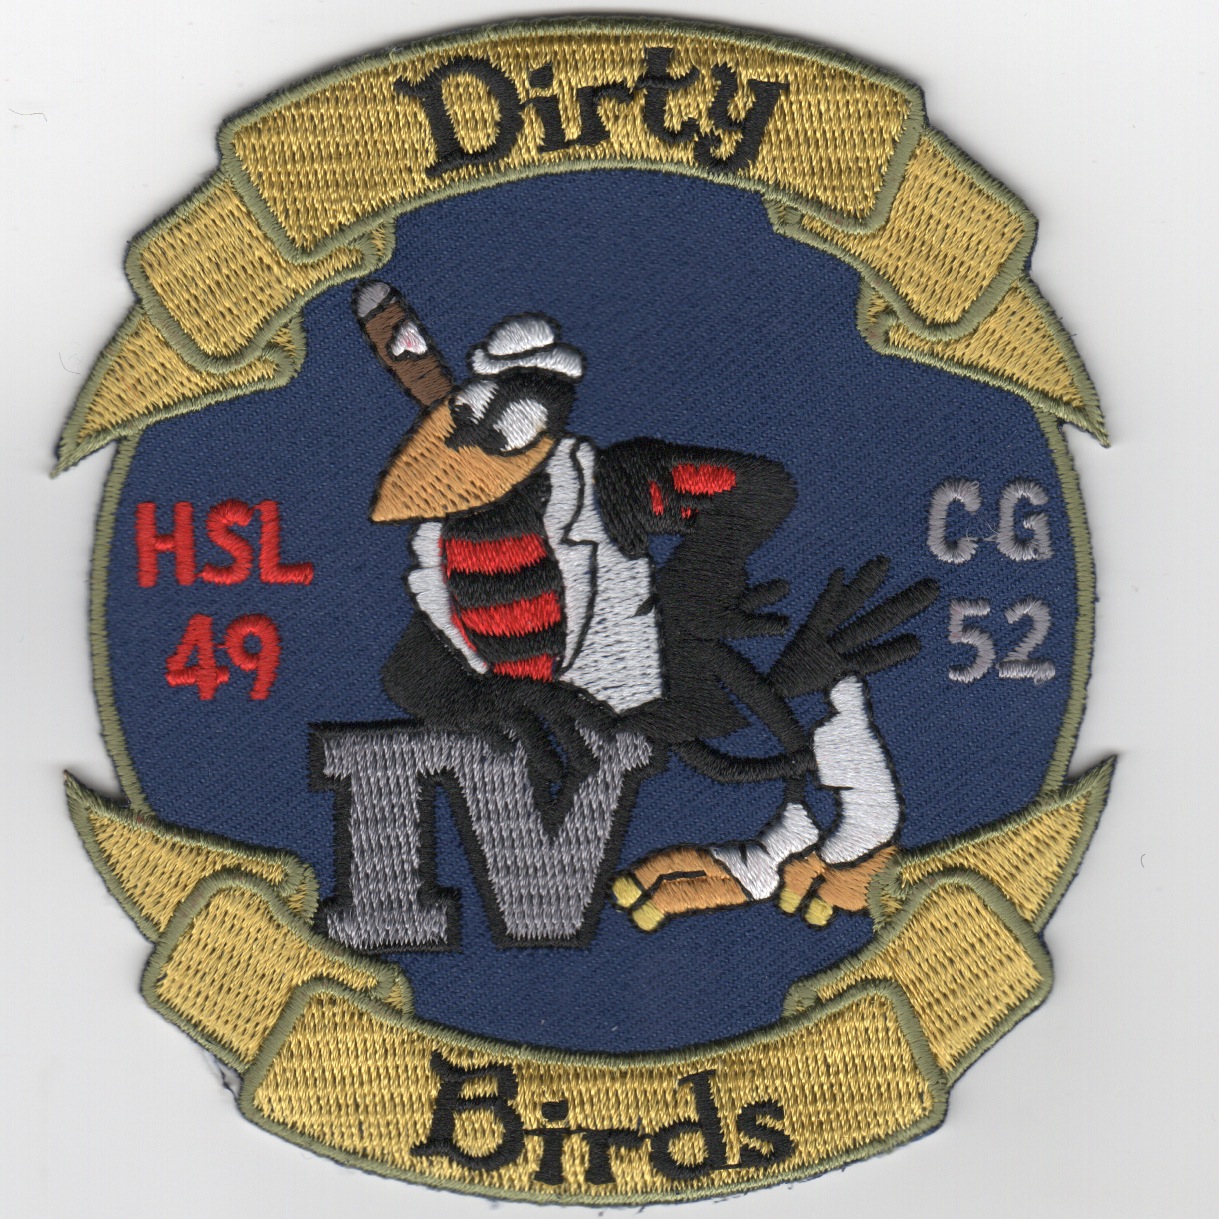 HSL-49 Det-4 'Dirty Birds' Patch